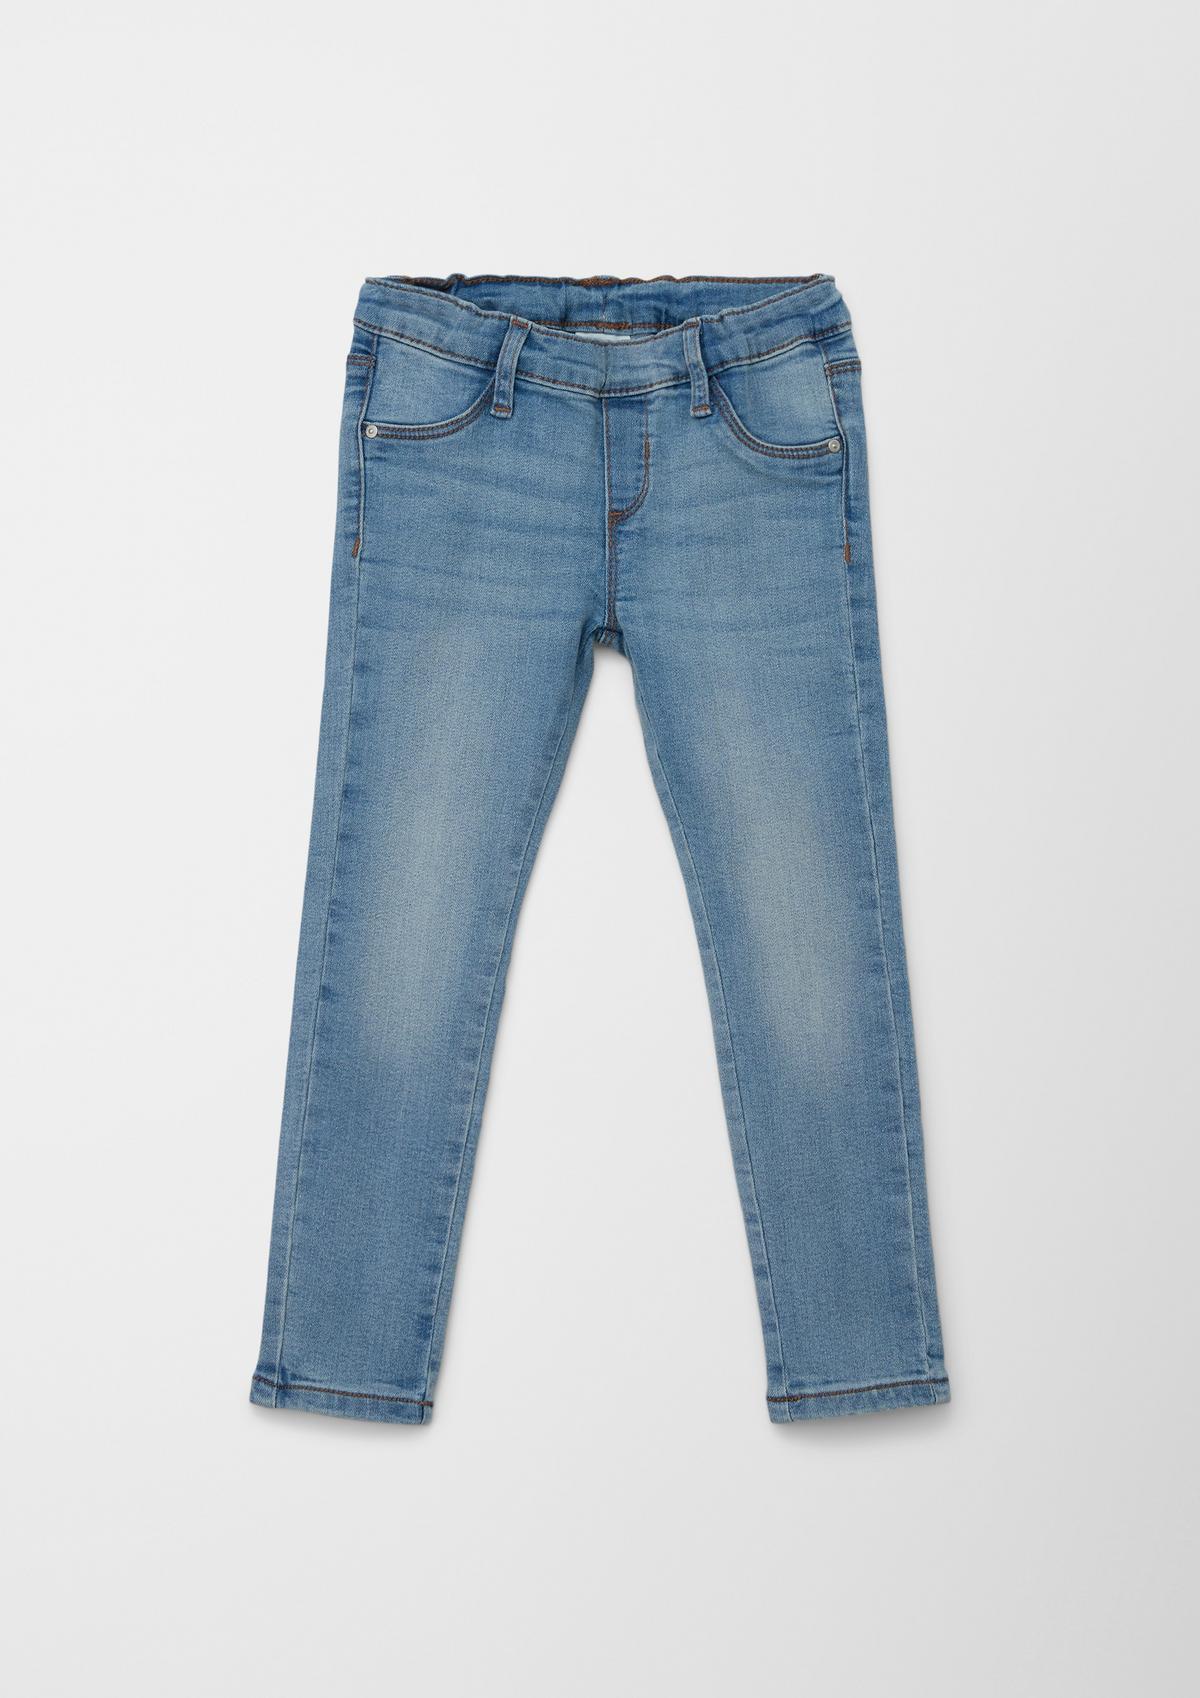 Jeans tregging / regular fit / high rise / tapered leg